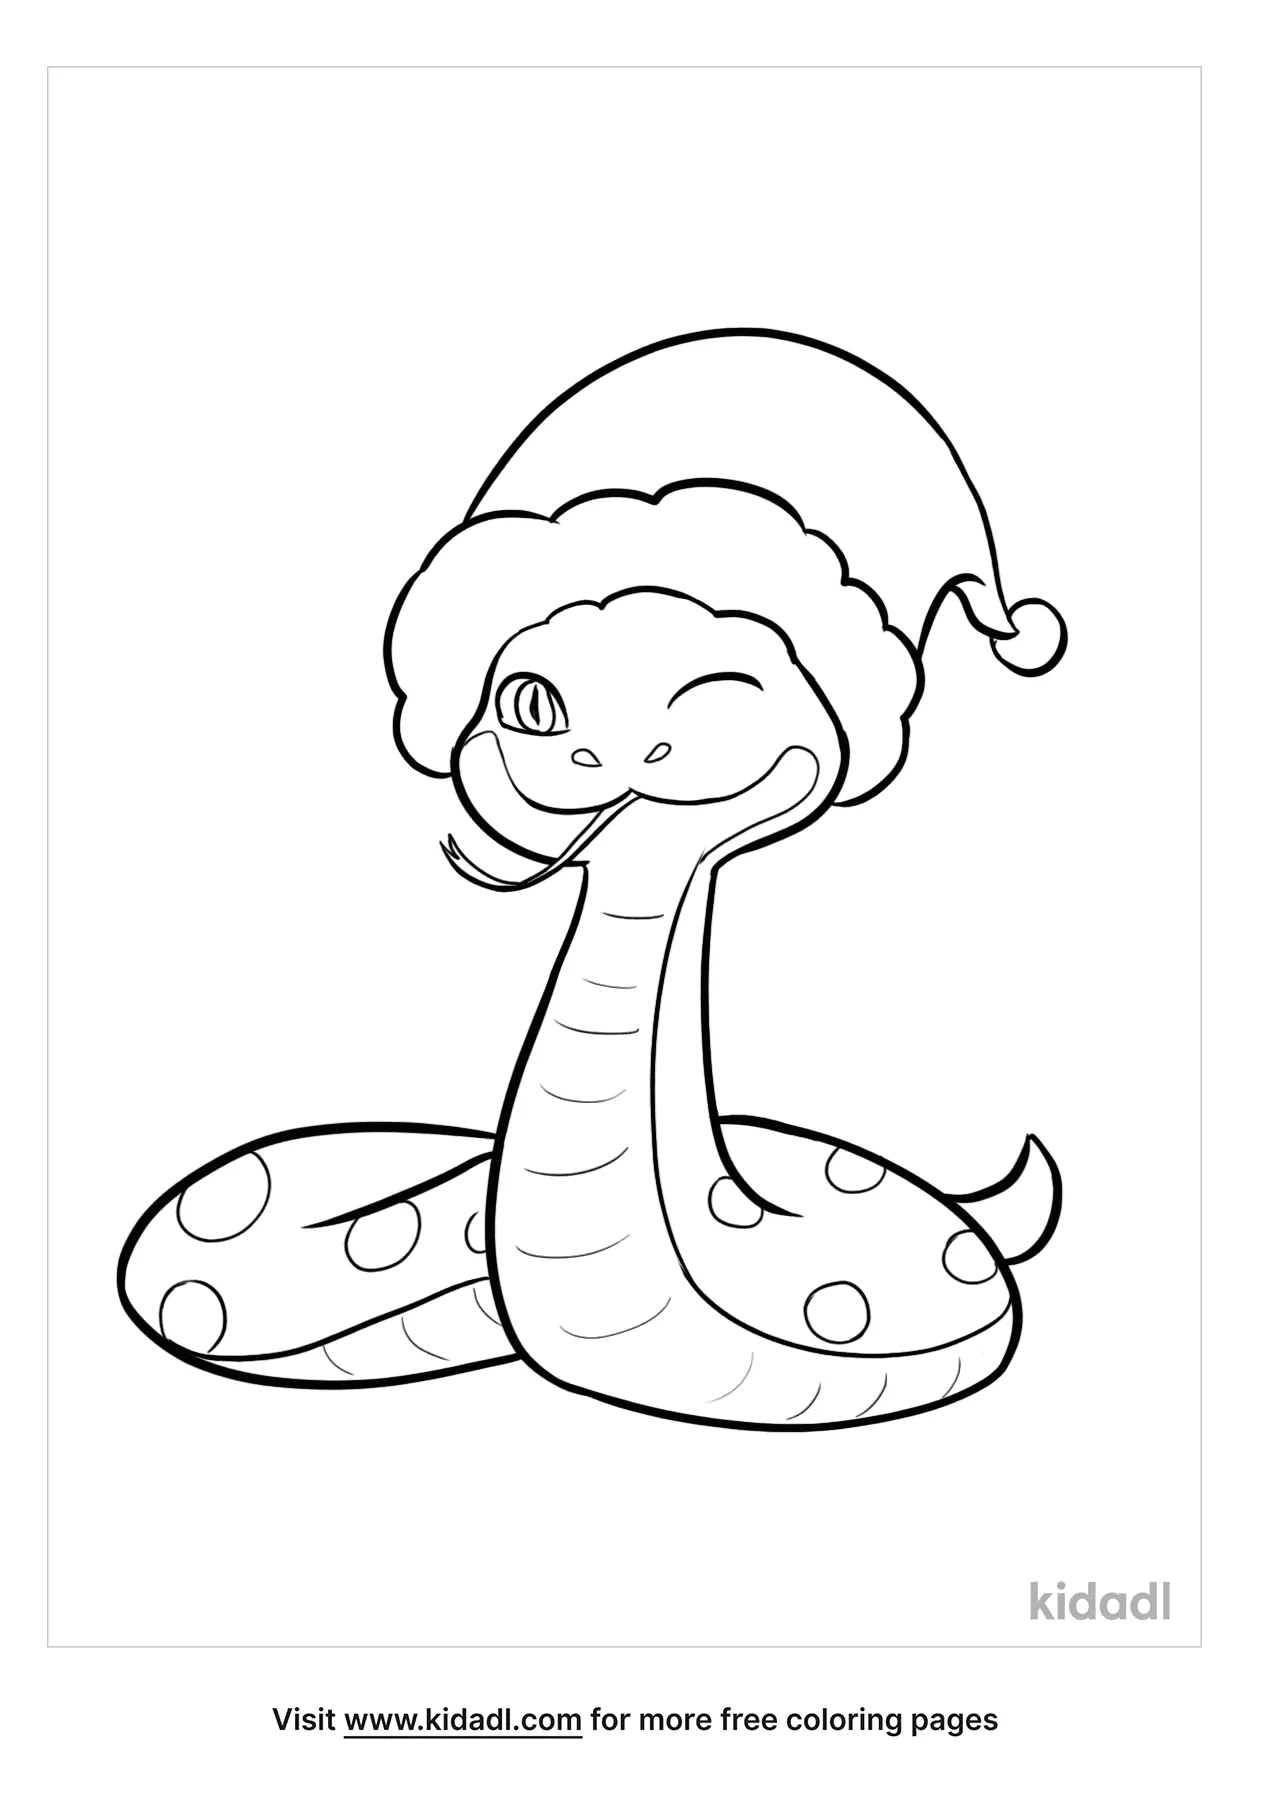 Christmas Snake Coloring Page